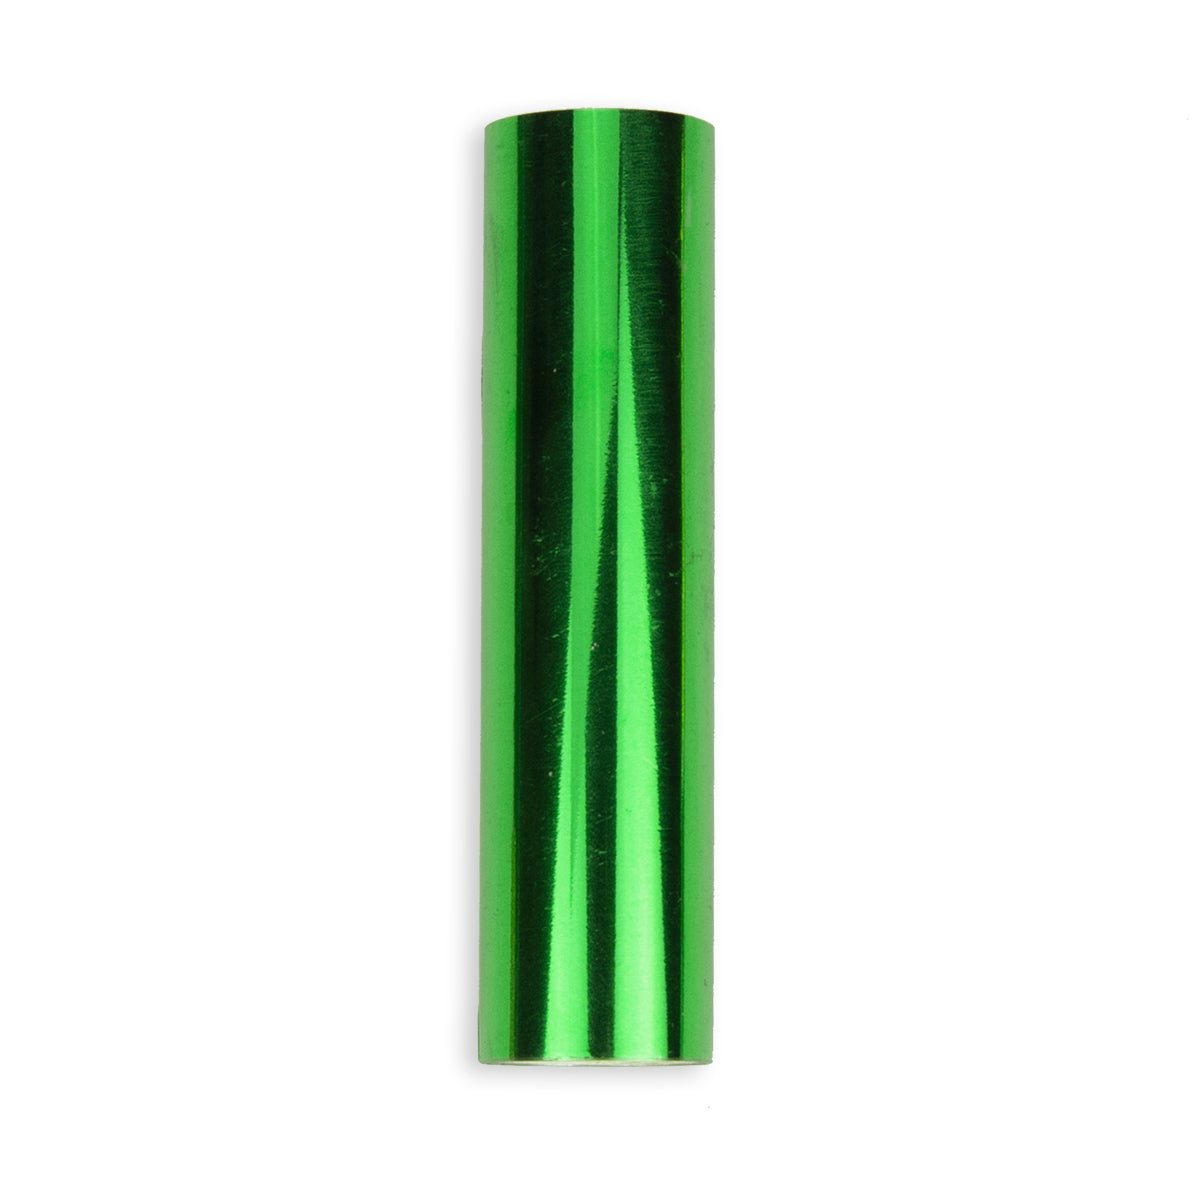 Spellbinders Glimmer Hot Foil Roll - Green - Crafty Meraki